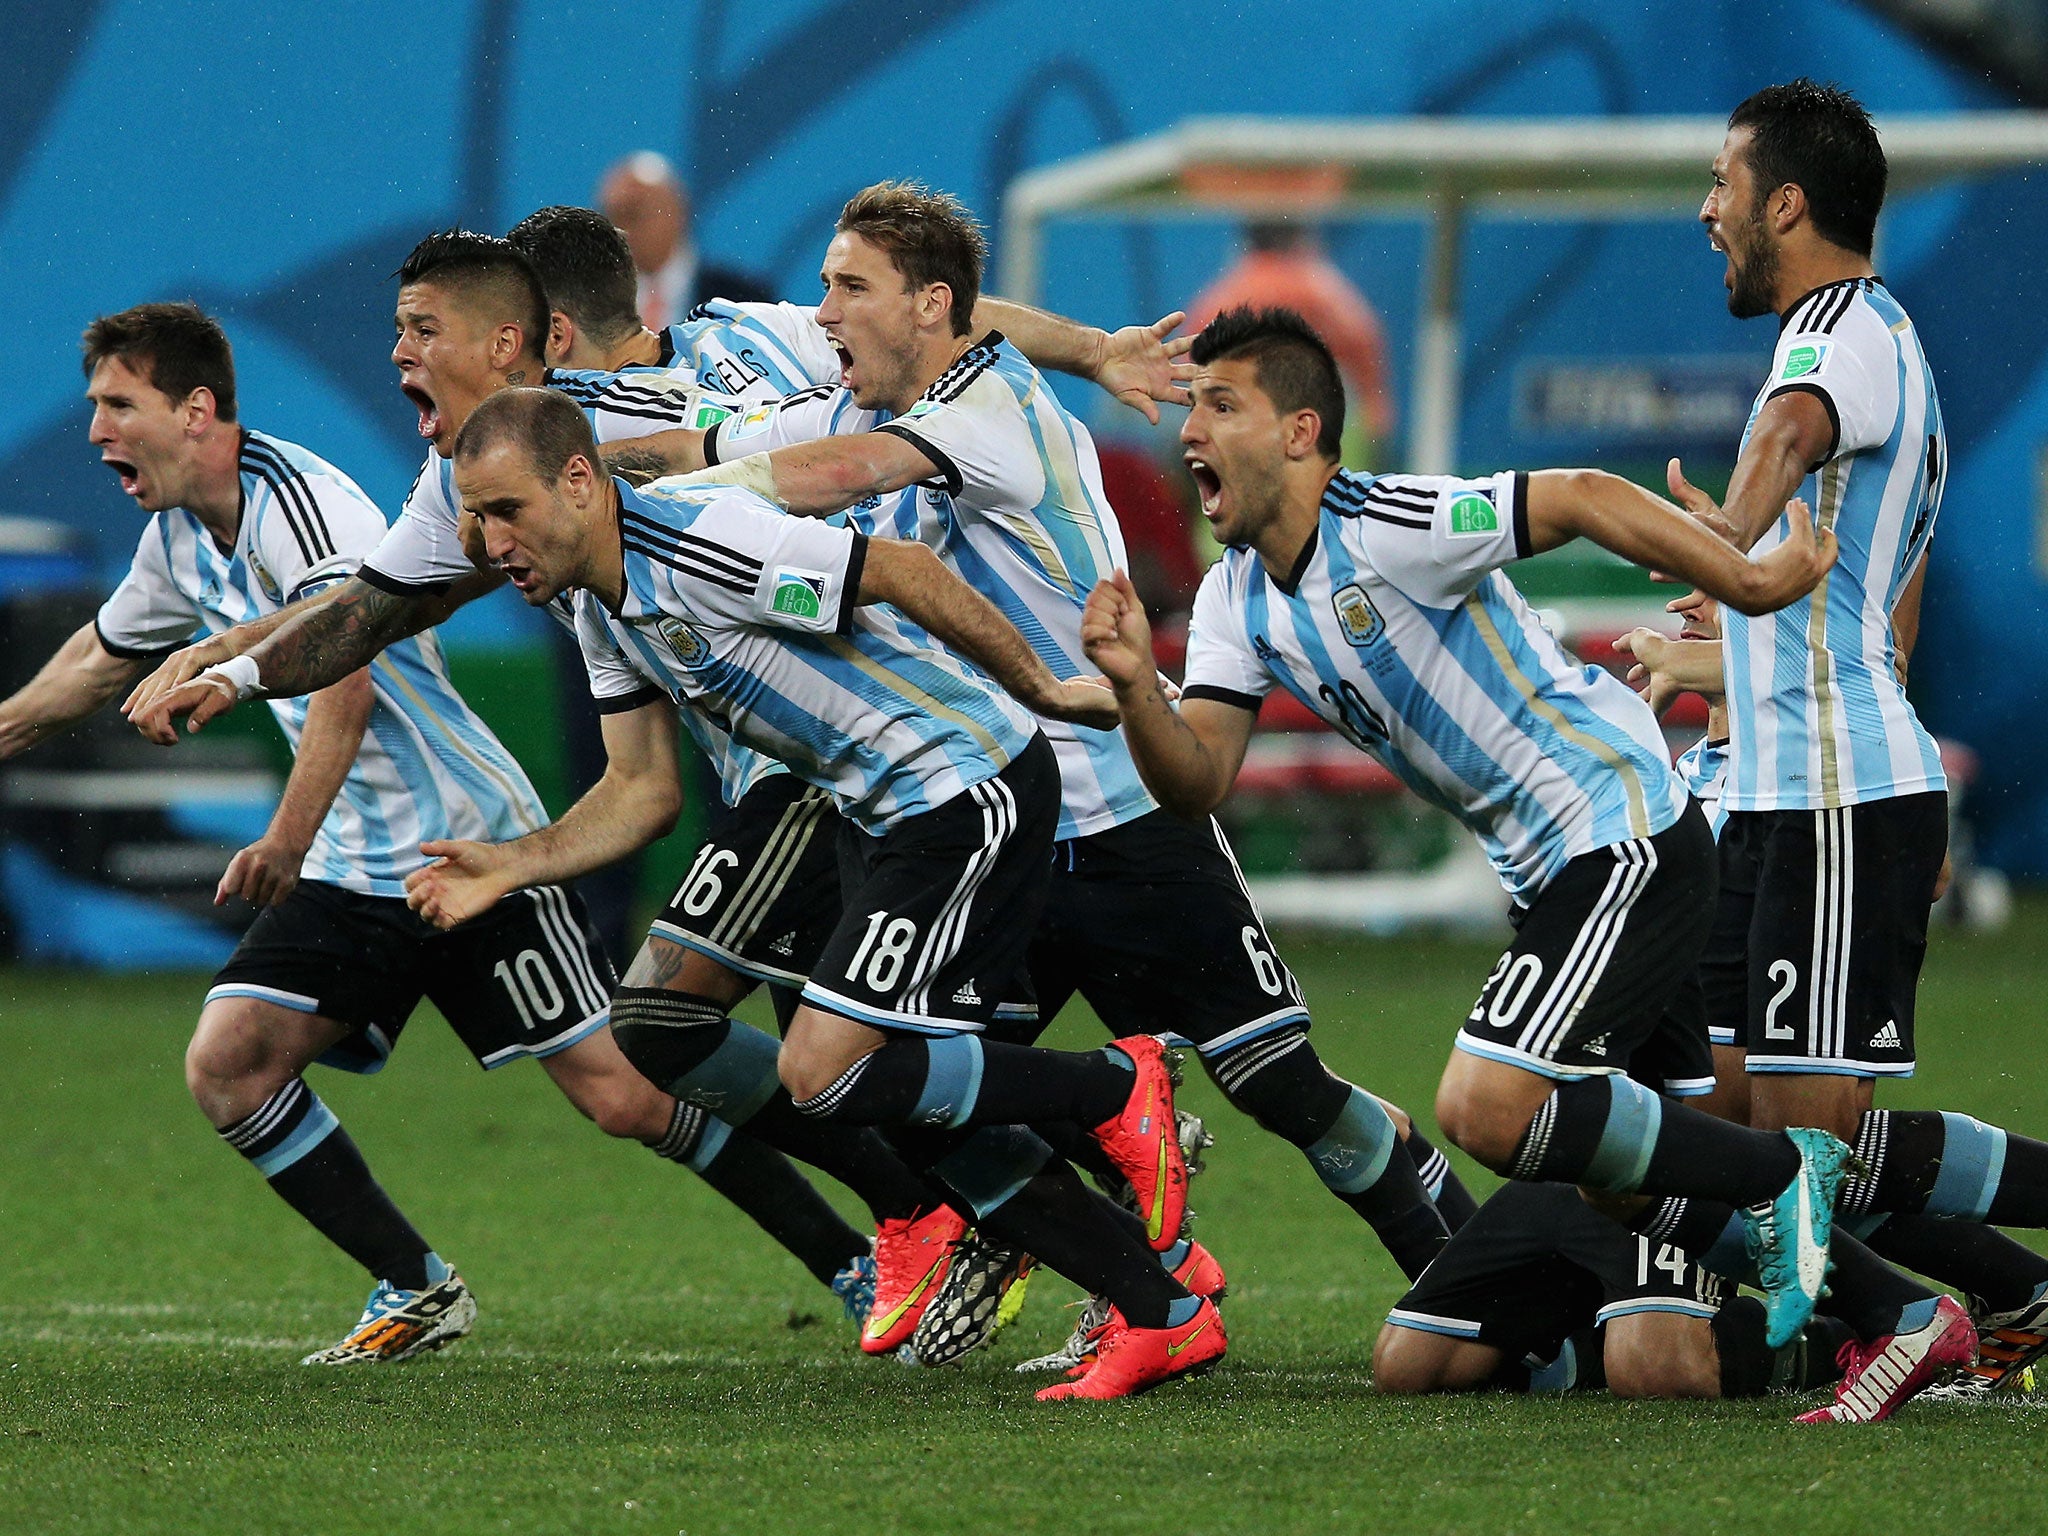 Adidas Brazuca Men's 2014 World Cup Final Match Ball Germany-Argentina